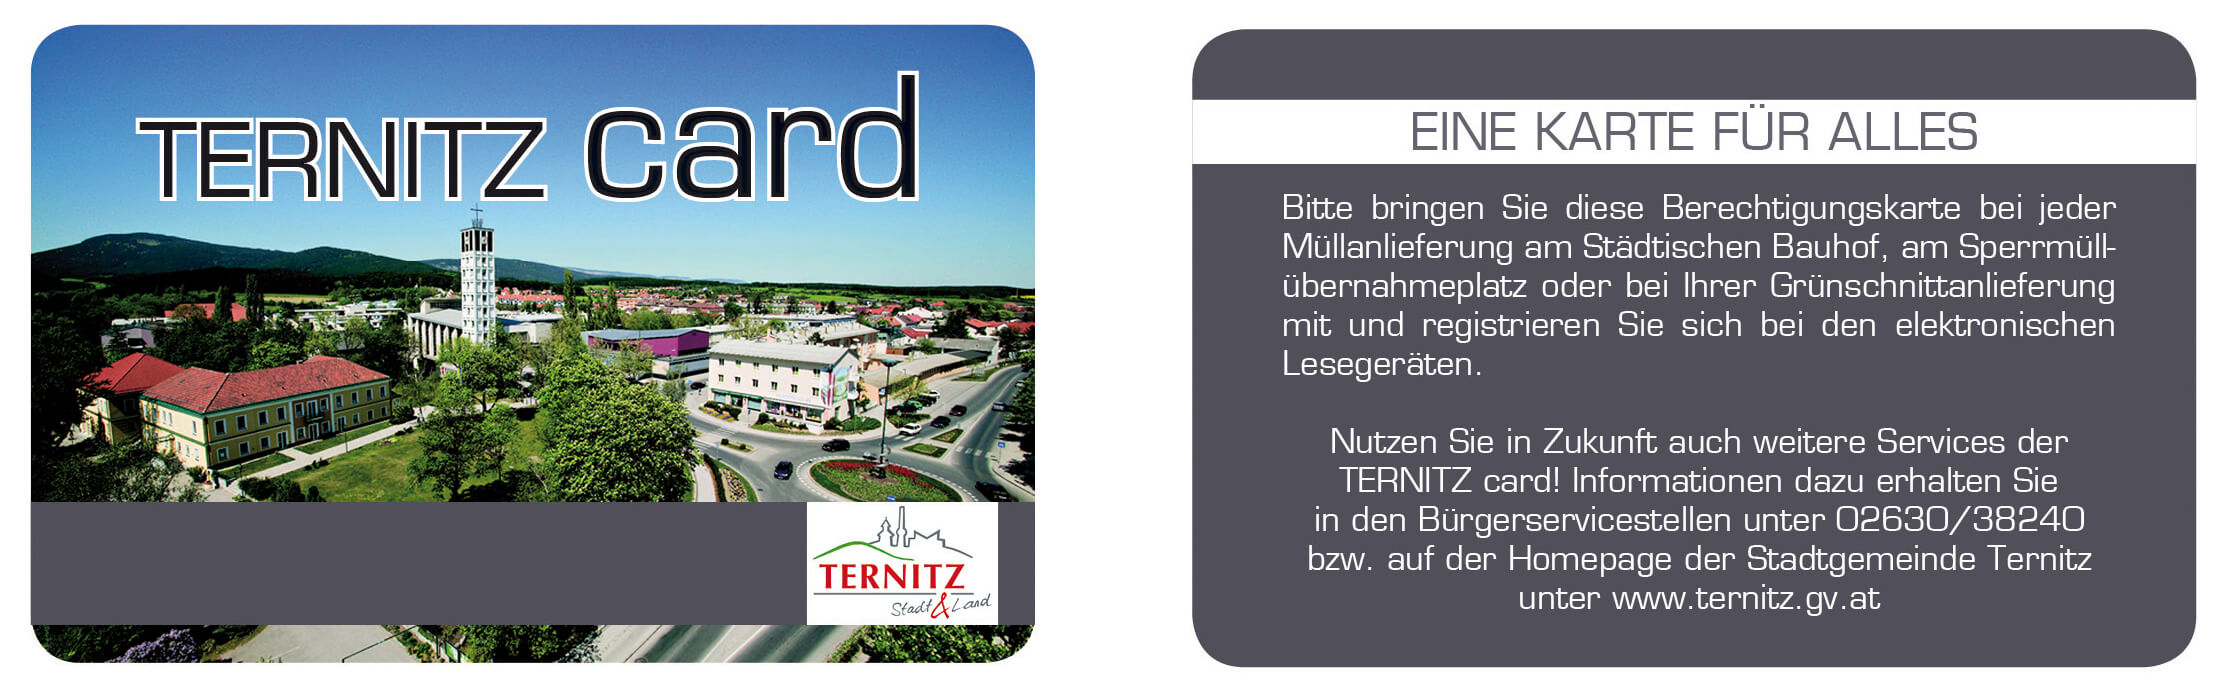 Titelfoto Ternitz Card